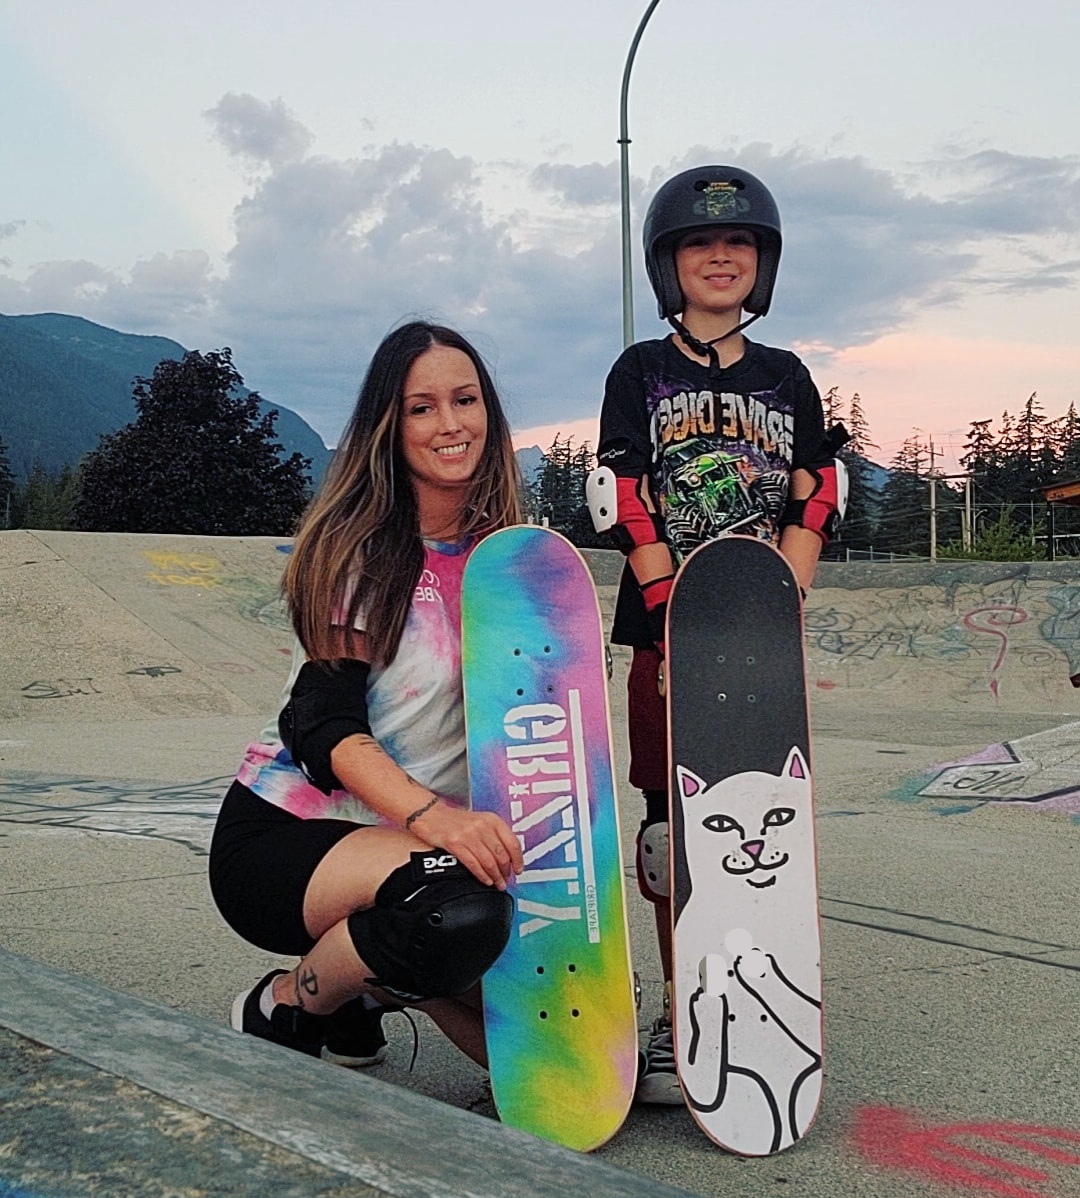 Sarah skateboarding with her son